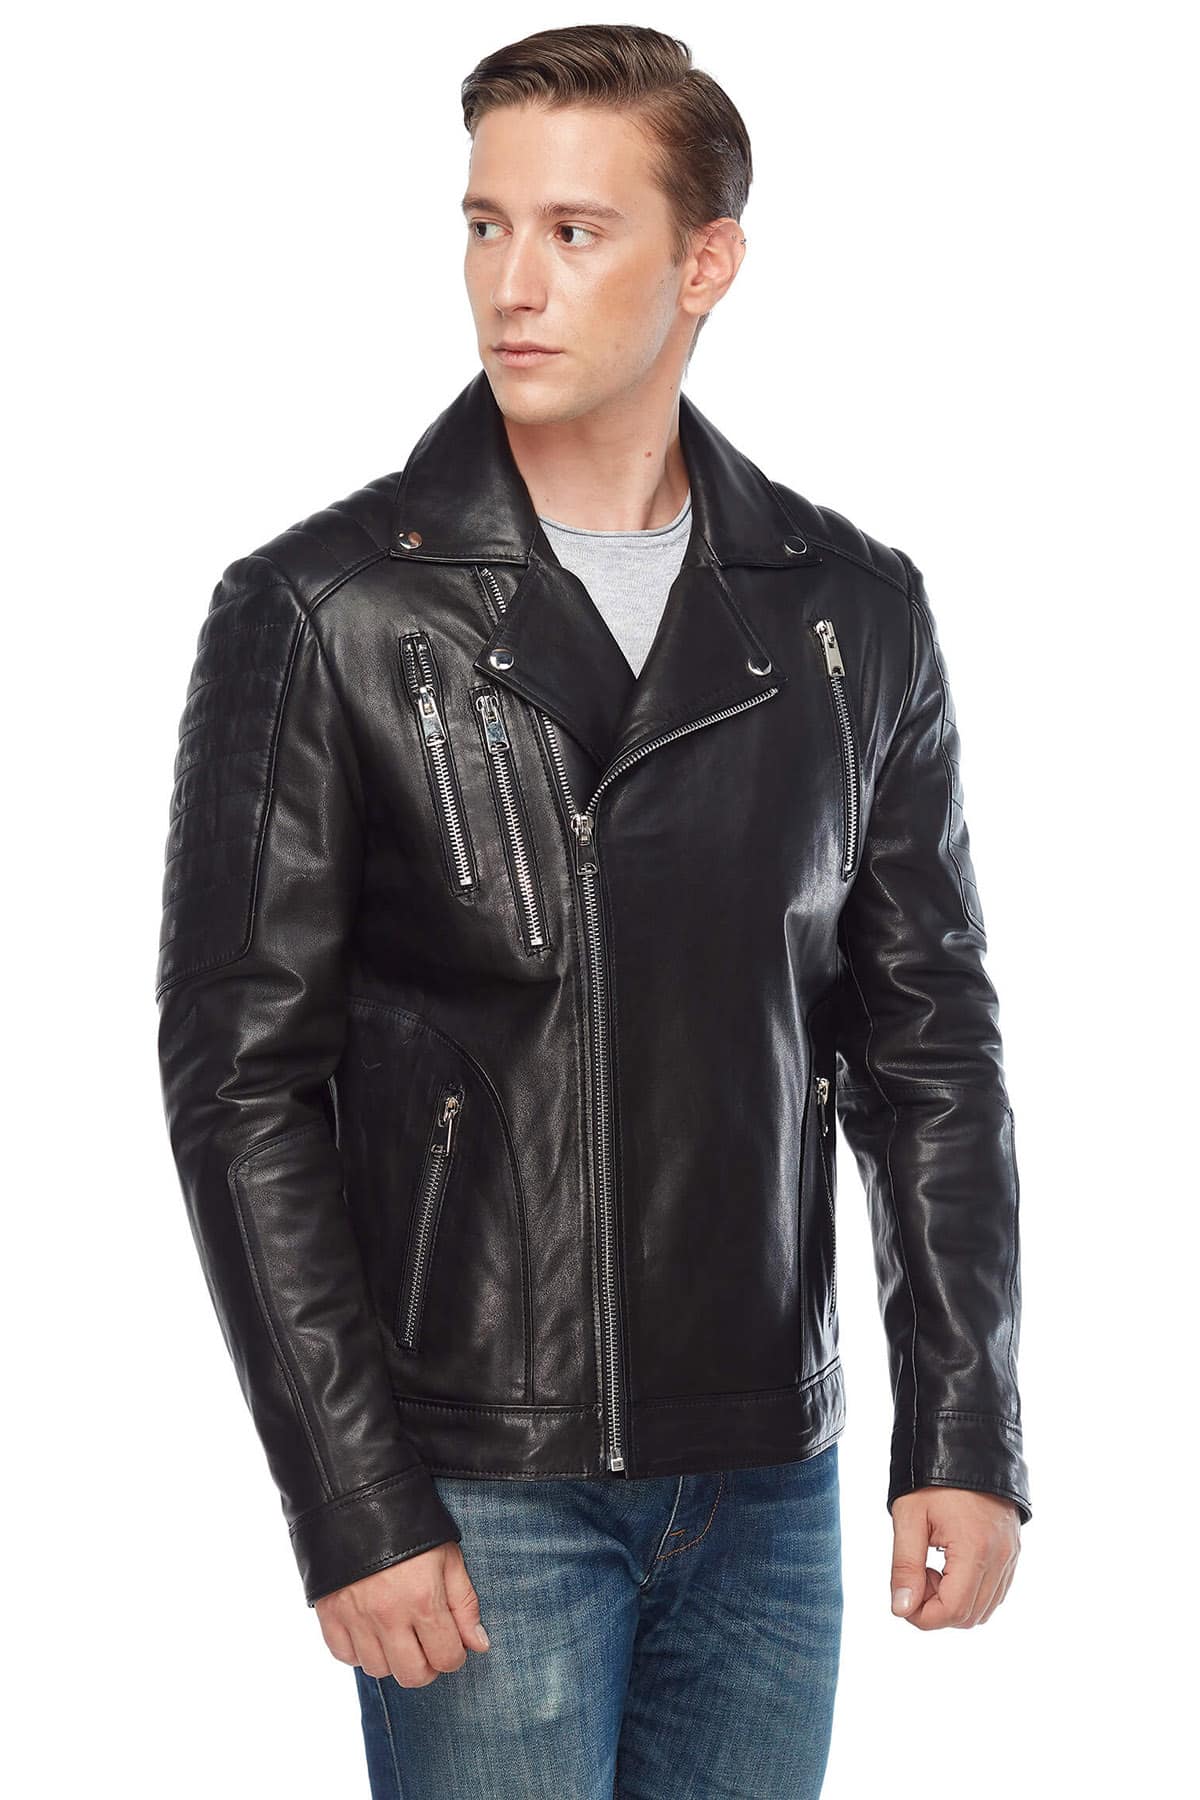 Oris Men's 100 % Real Black Leather Motorcycle Jacket